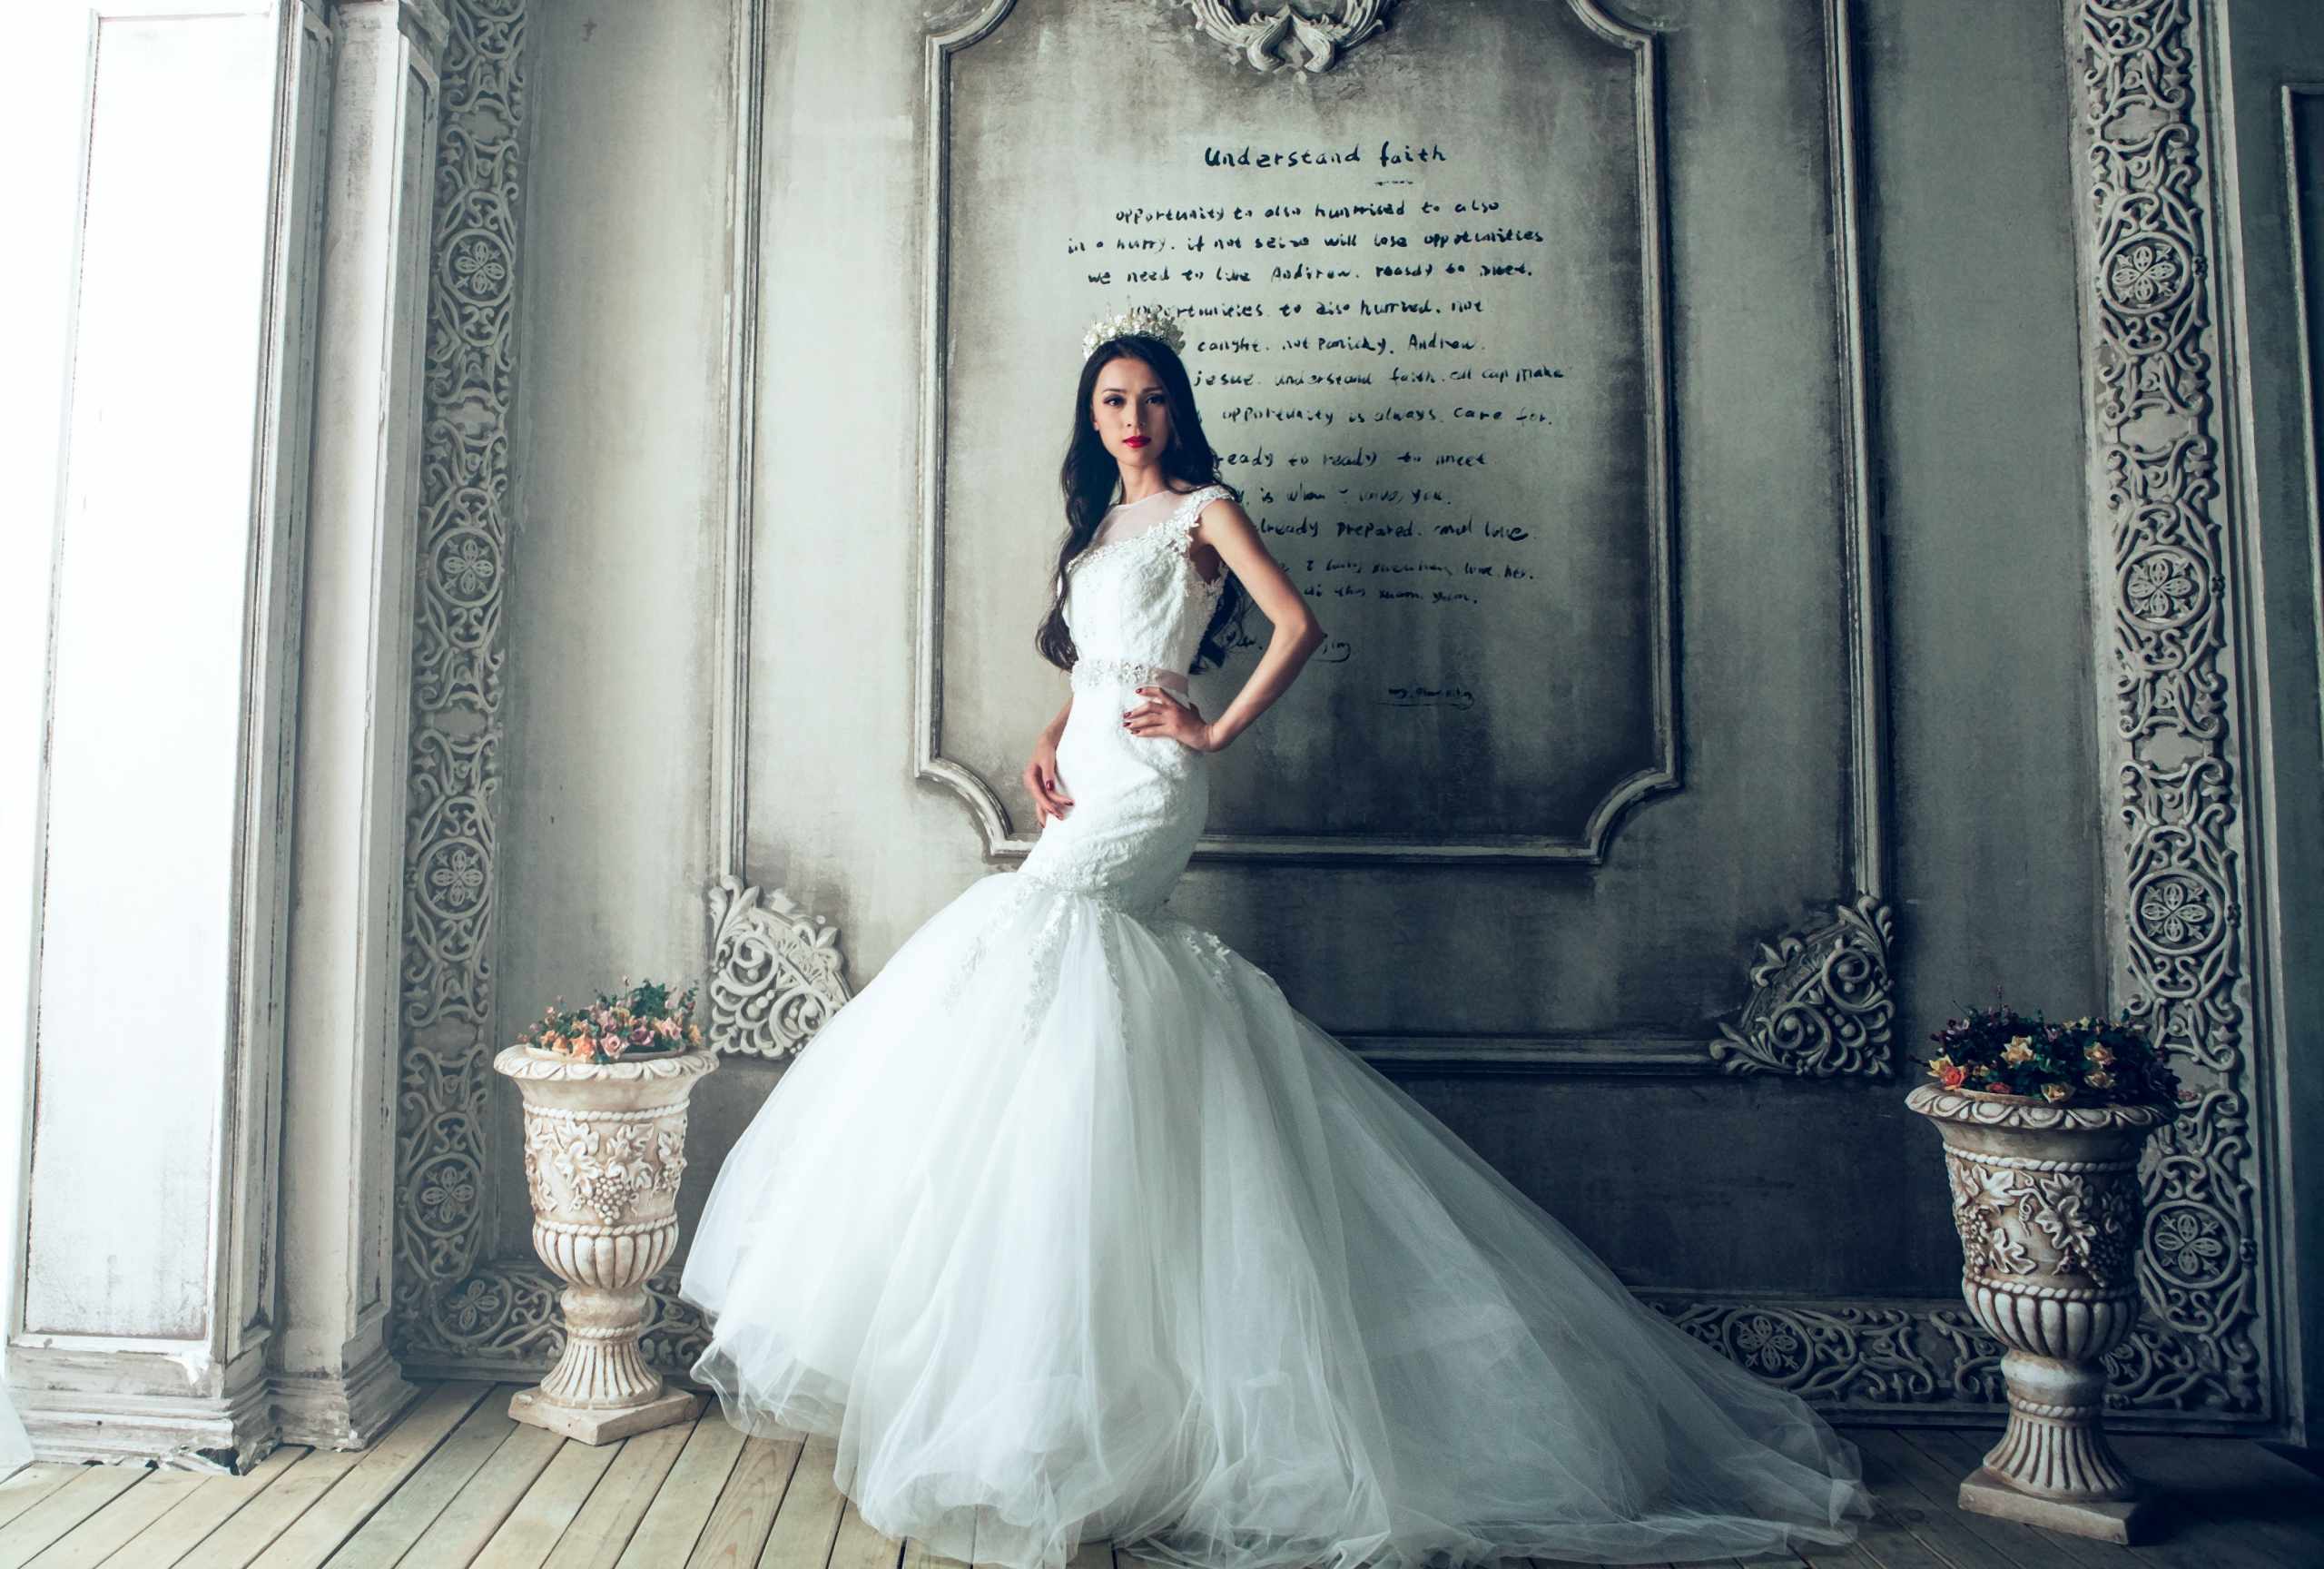 A Woman Posing in a Wedding Dress